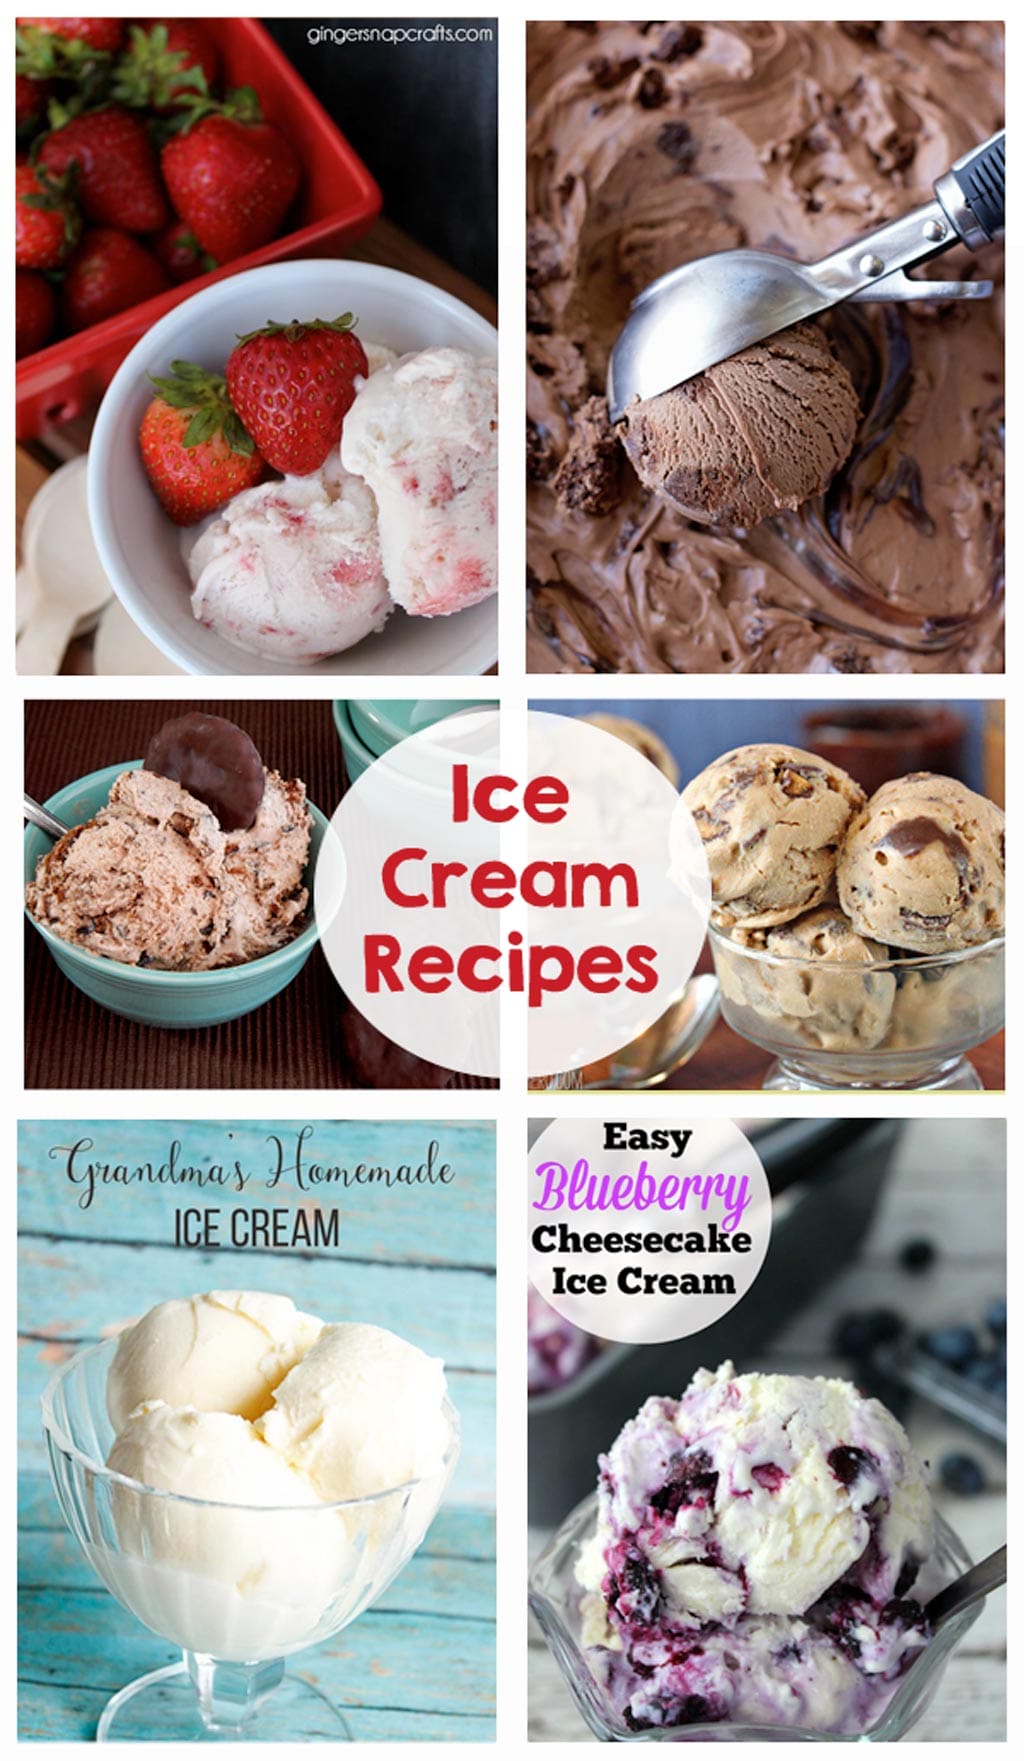 Ice Cream Recipes - no churn, chocolate, vanilla, peanut butter, strawberry, blueberry, brownie batter, cake batter, peach... so many fun recipes!